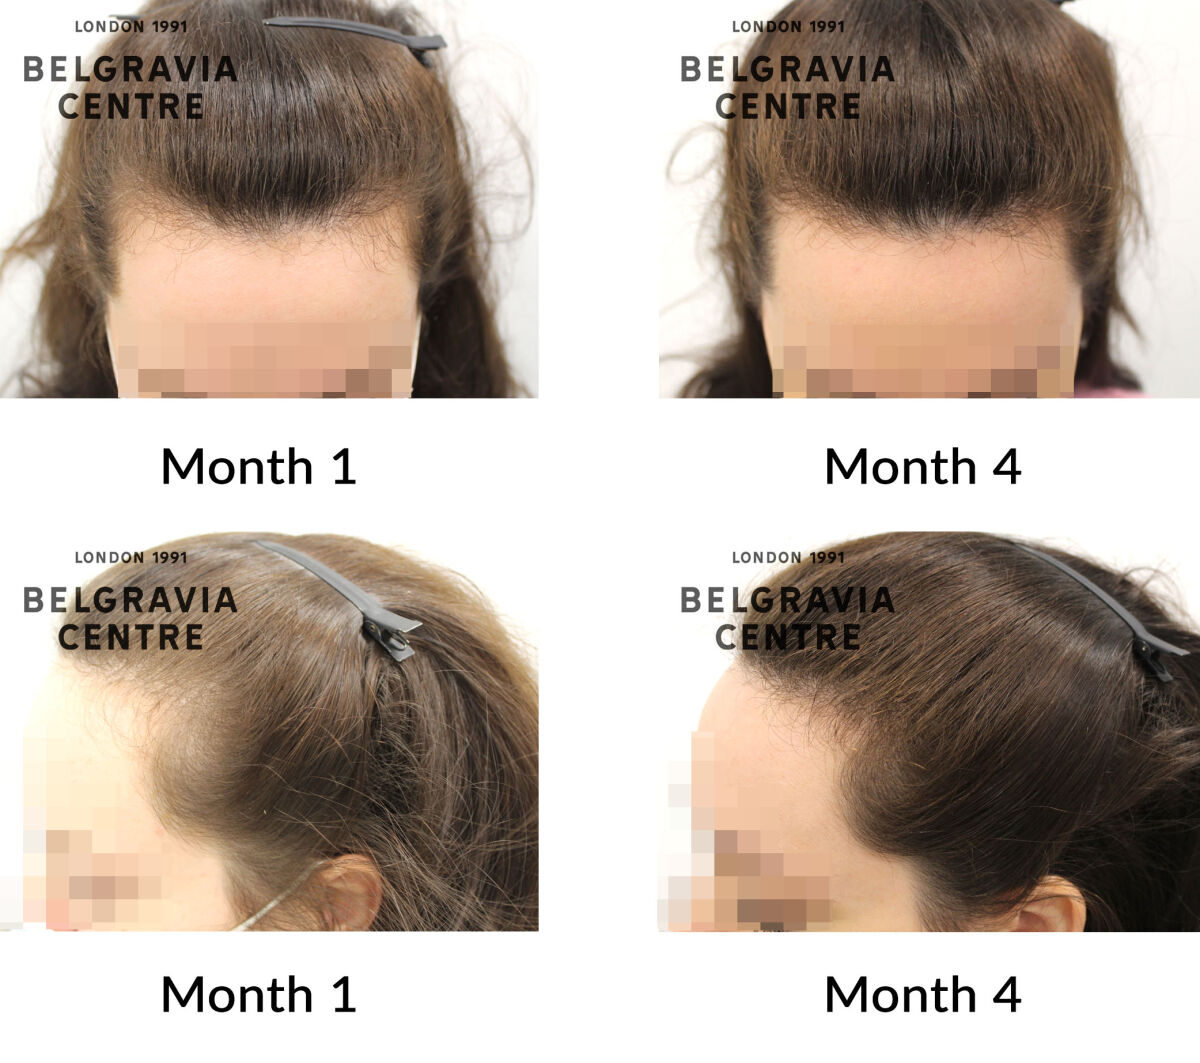 female pattern hair loss the belgravia centre 434284